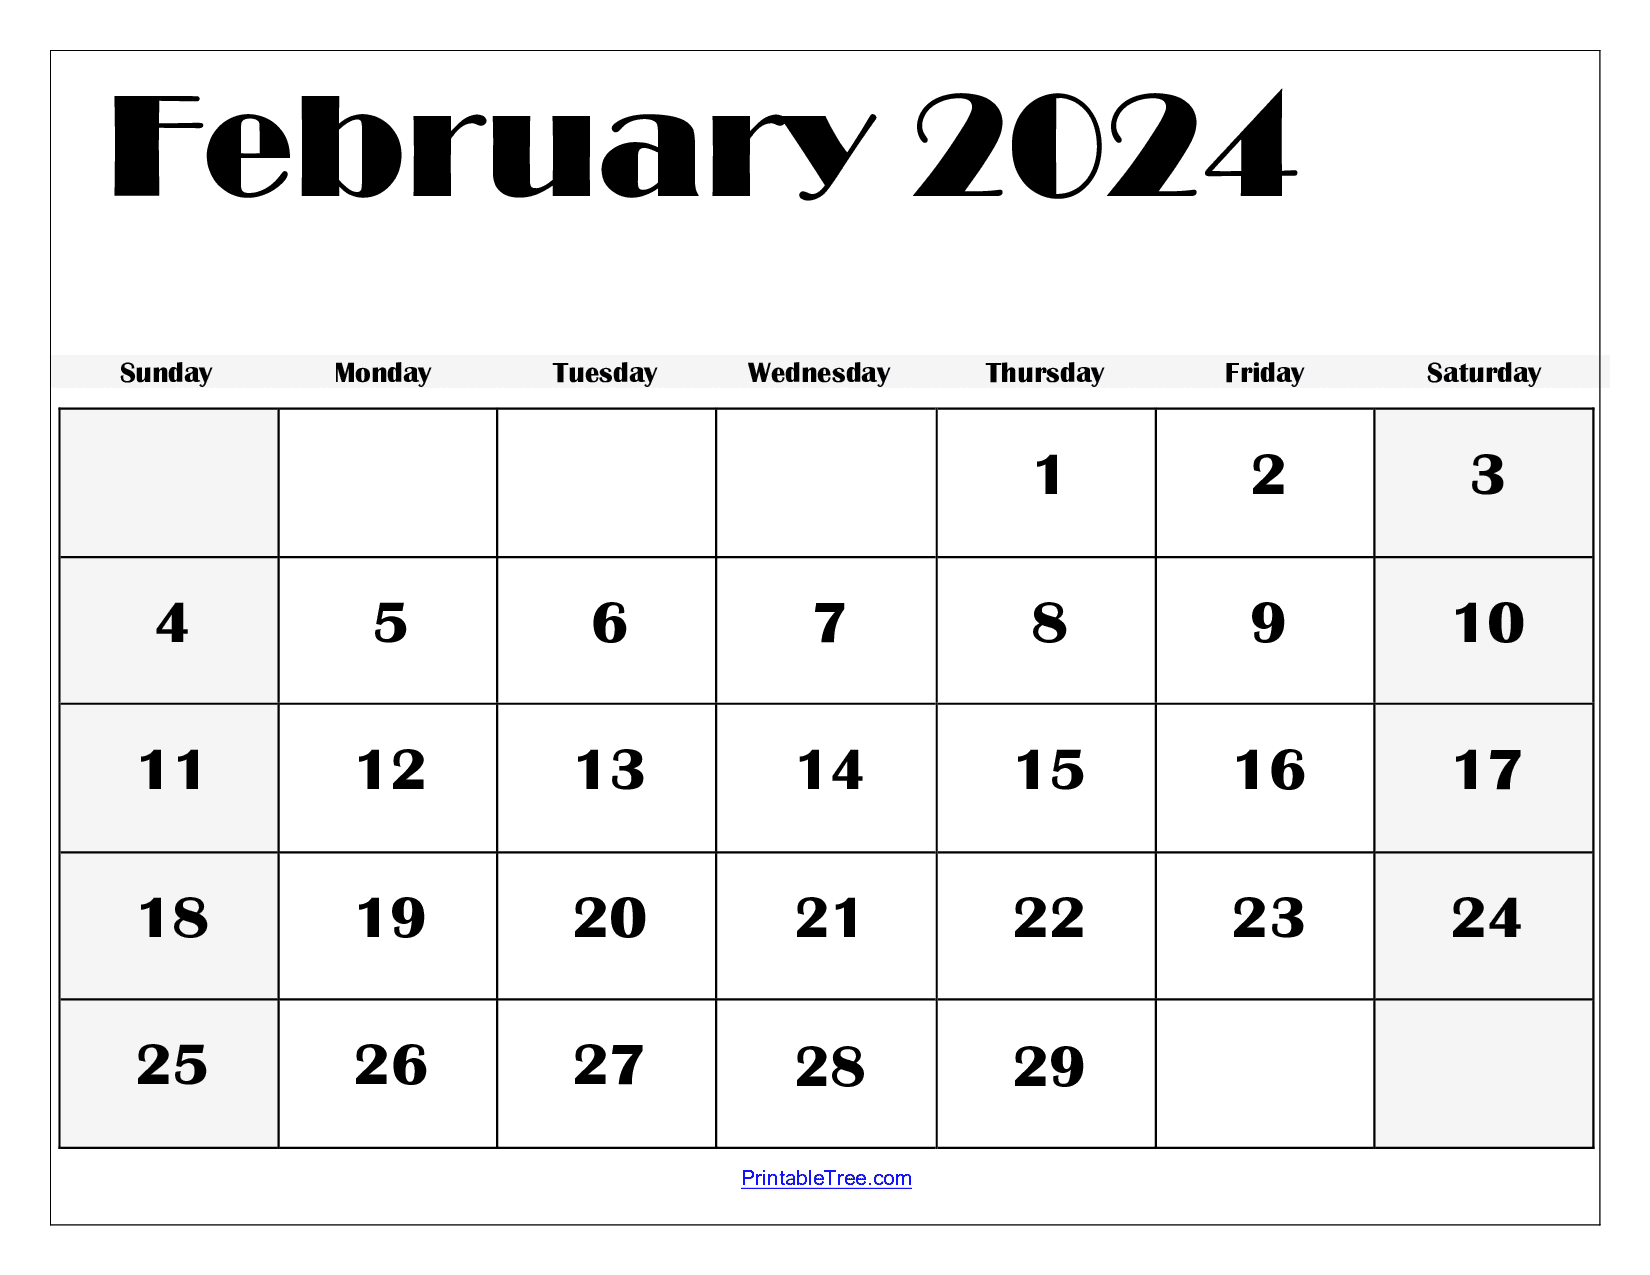 February 2024 Calendar Printable Pdf Template With Holidays for Feb 2024 Free Printable Calendar